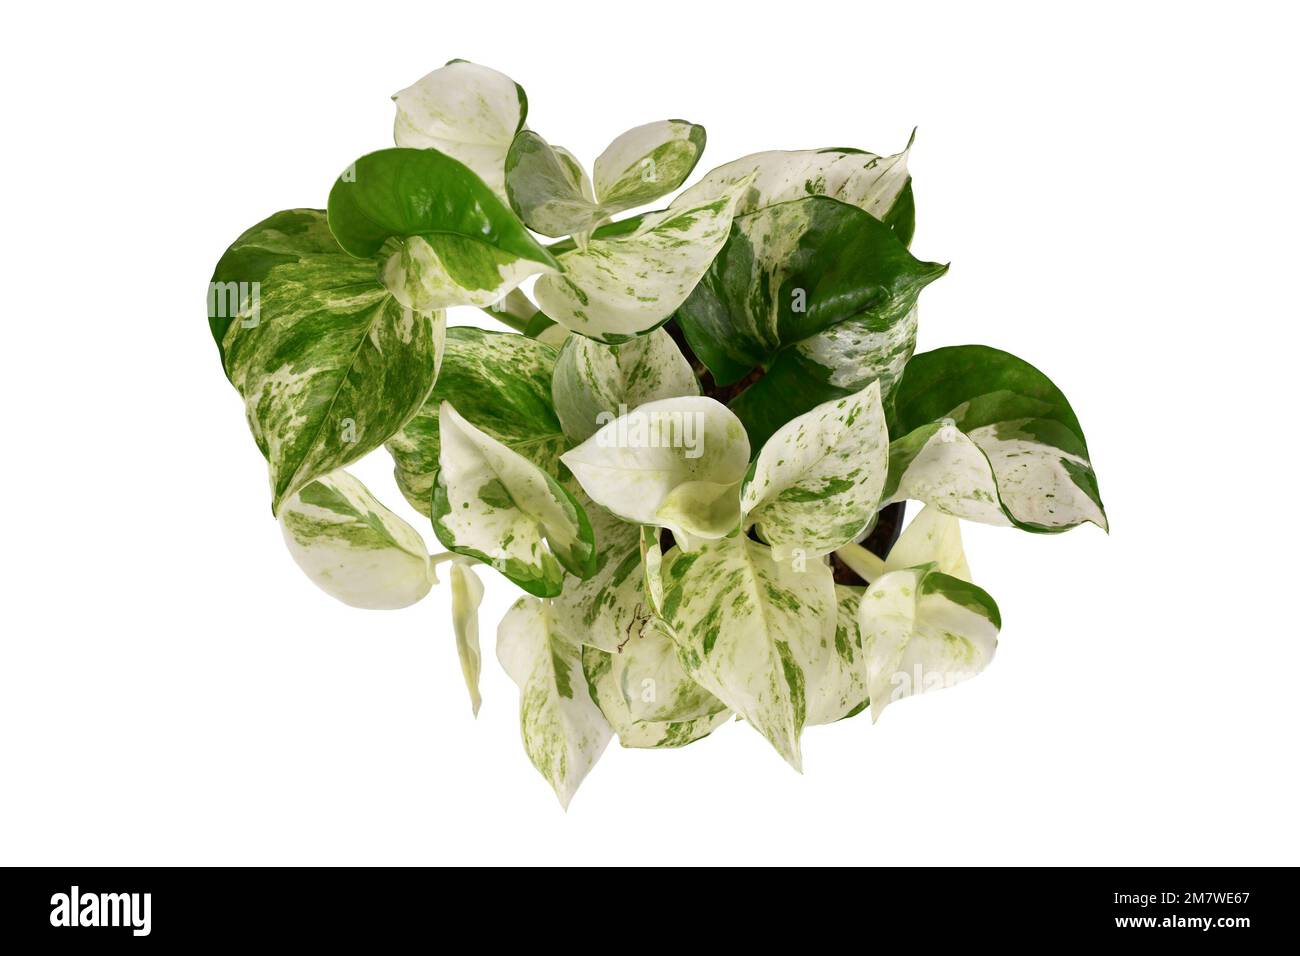 Top view of tropical 'Epipremnum Aureum Manjula' pothos houseplant on white background Stock Photo